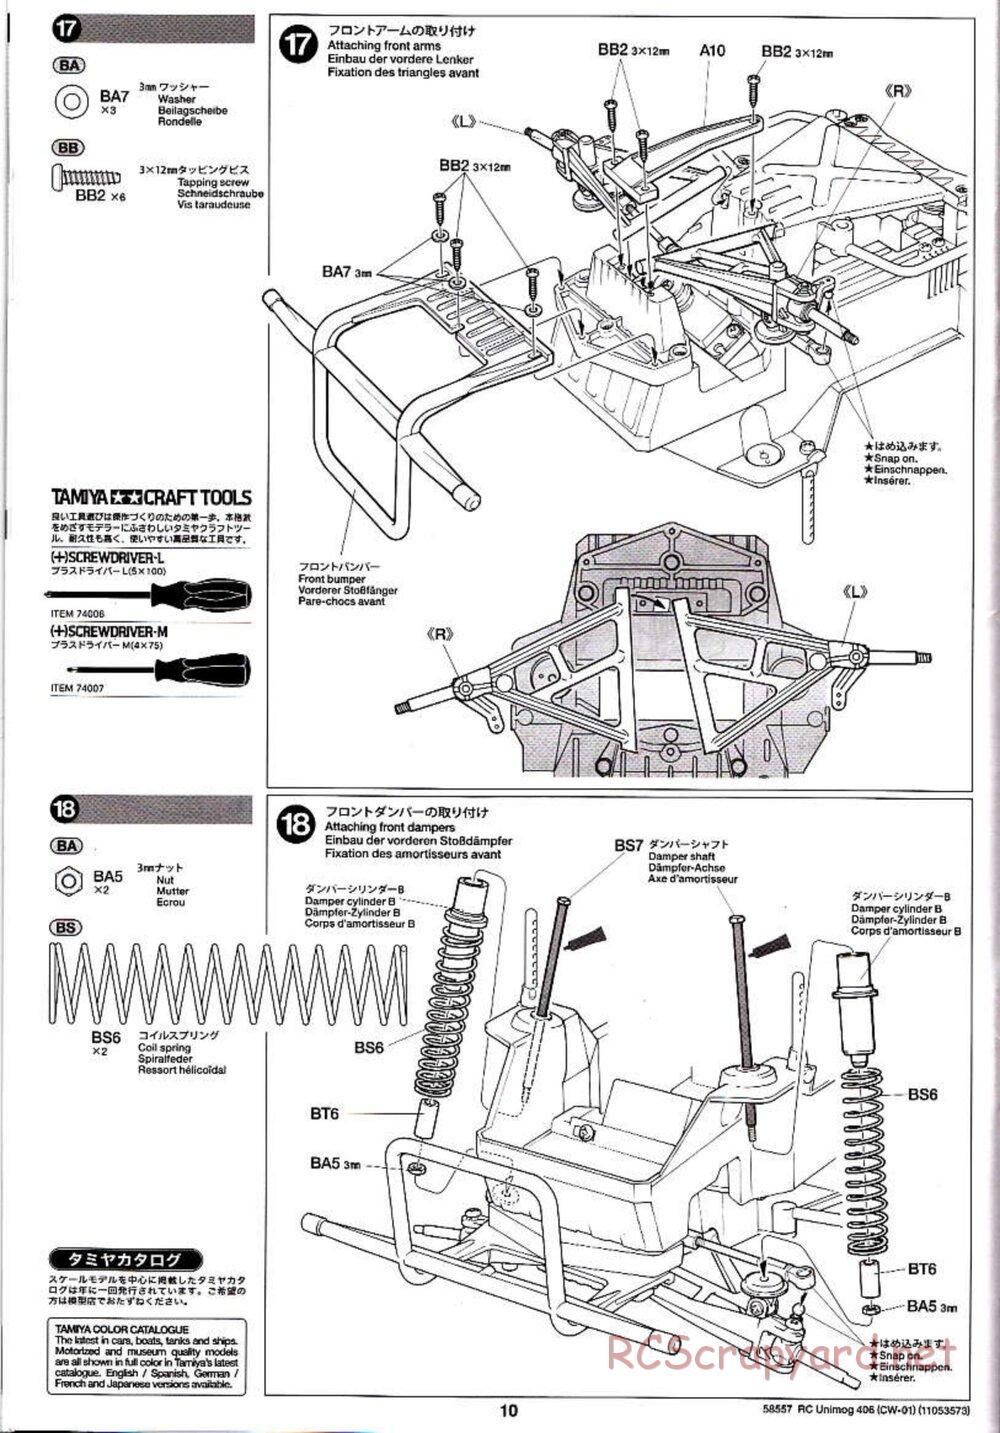 Tamiya - Mercedes-Benz Unimog 406 Series U900 - CW-01 Chassis - Manual - Page 10